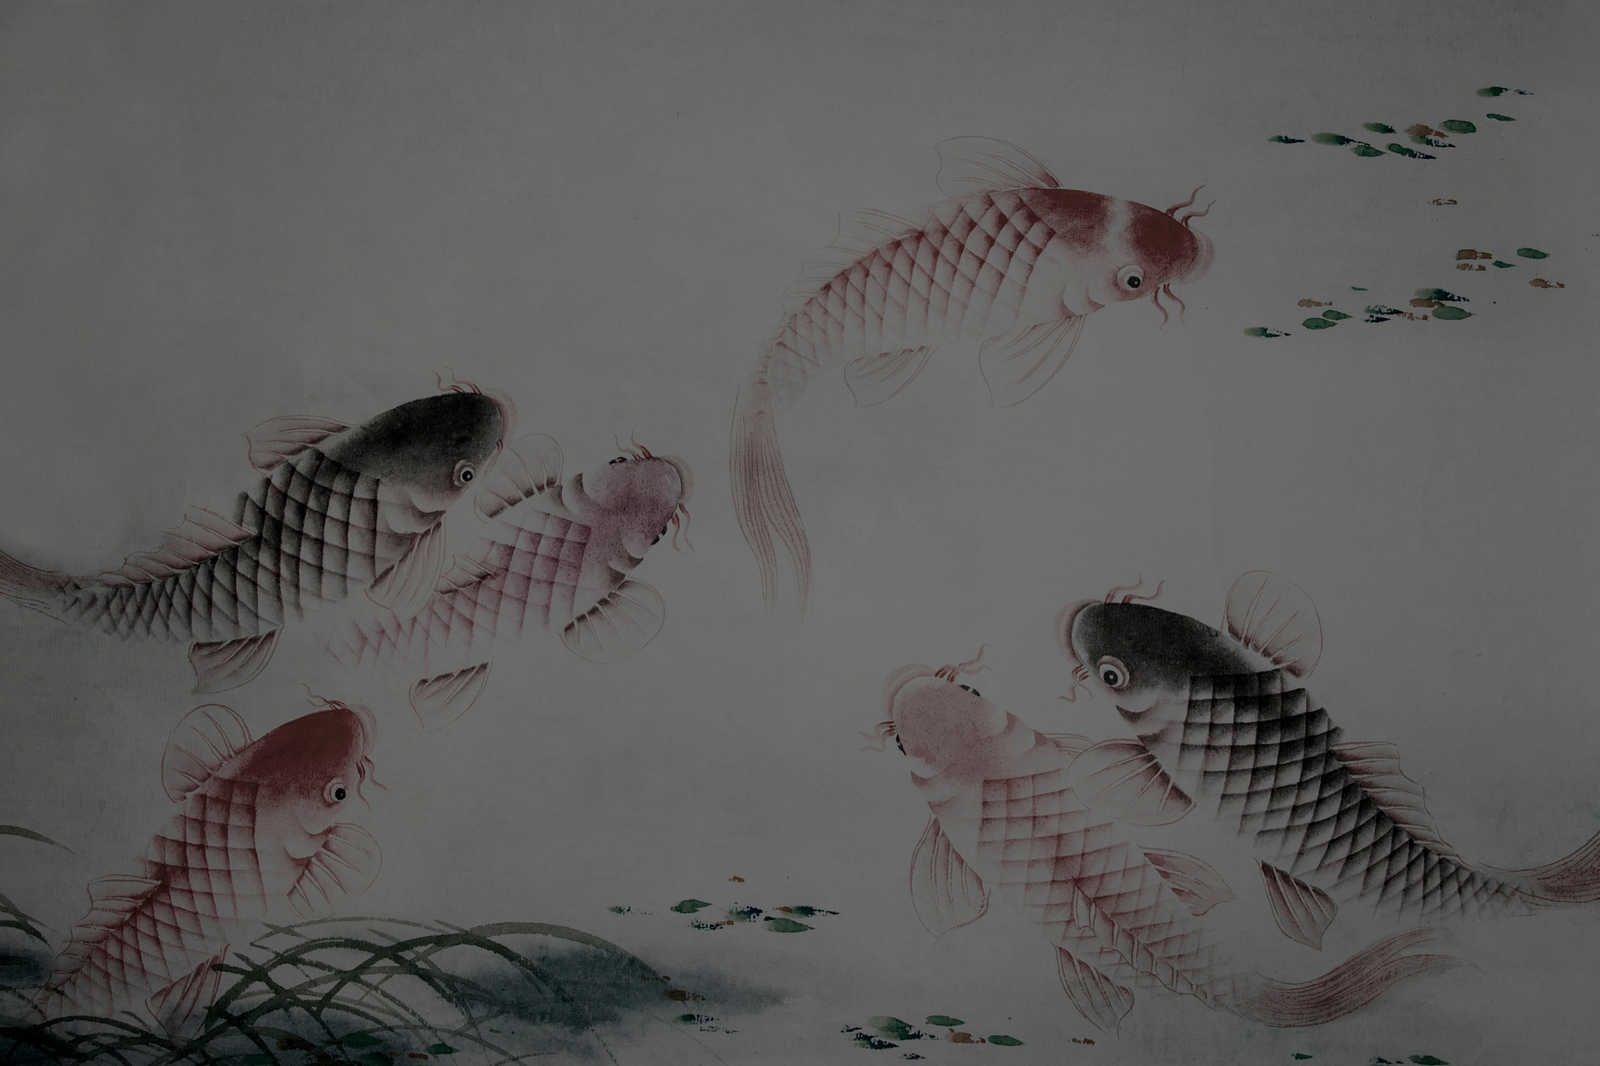             Cuadro en lienzo Estilo Asia con estanque Koi | gris - 0,90 m x 0,60 m
        